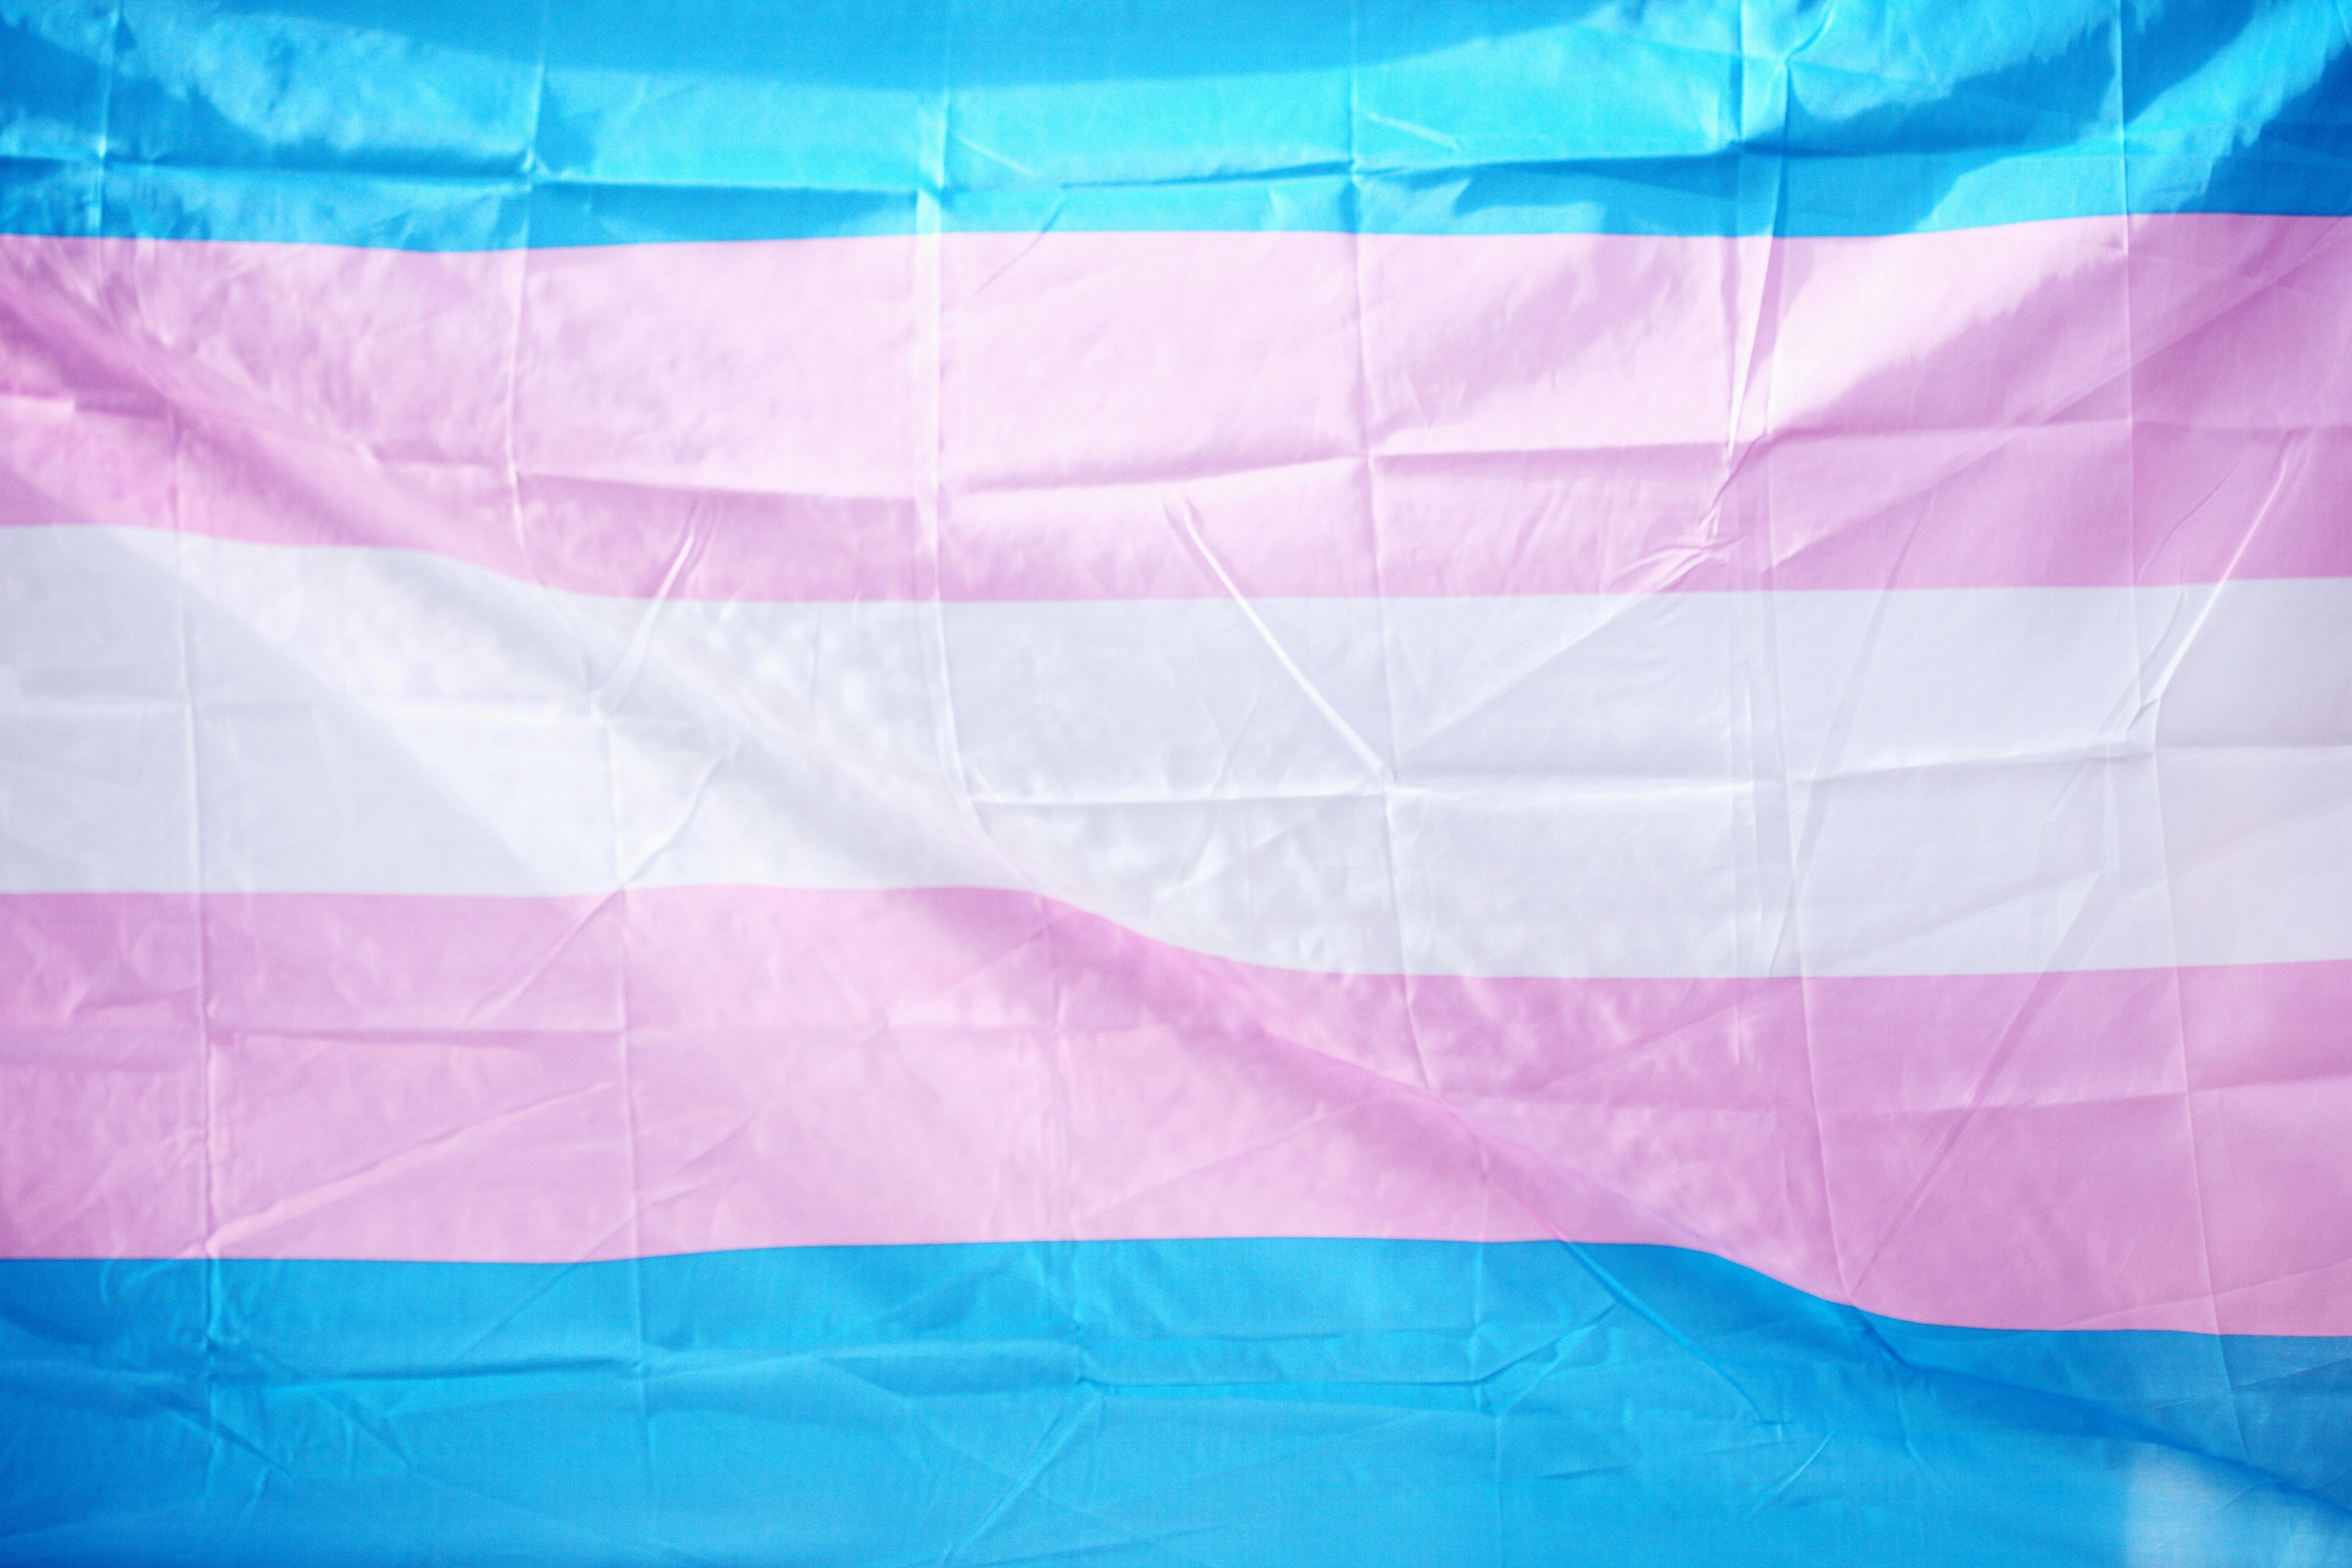 The transgender flag, comprised of blue, pink, and white stripes